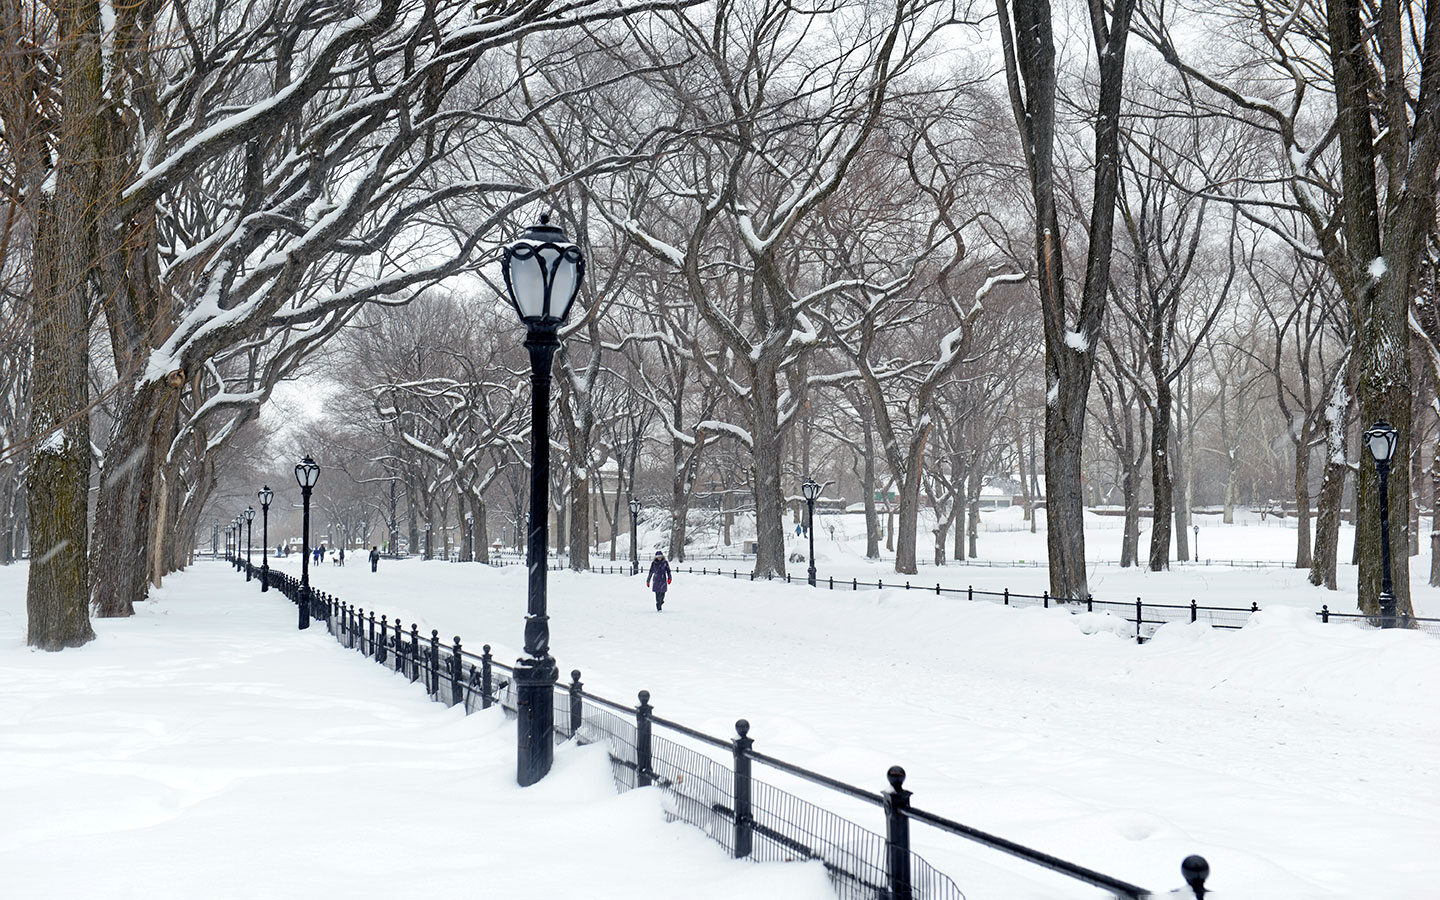 Snowy scenes in New York in winter